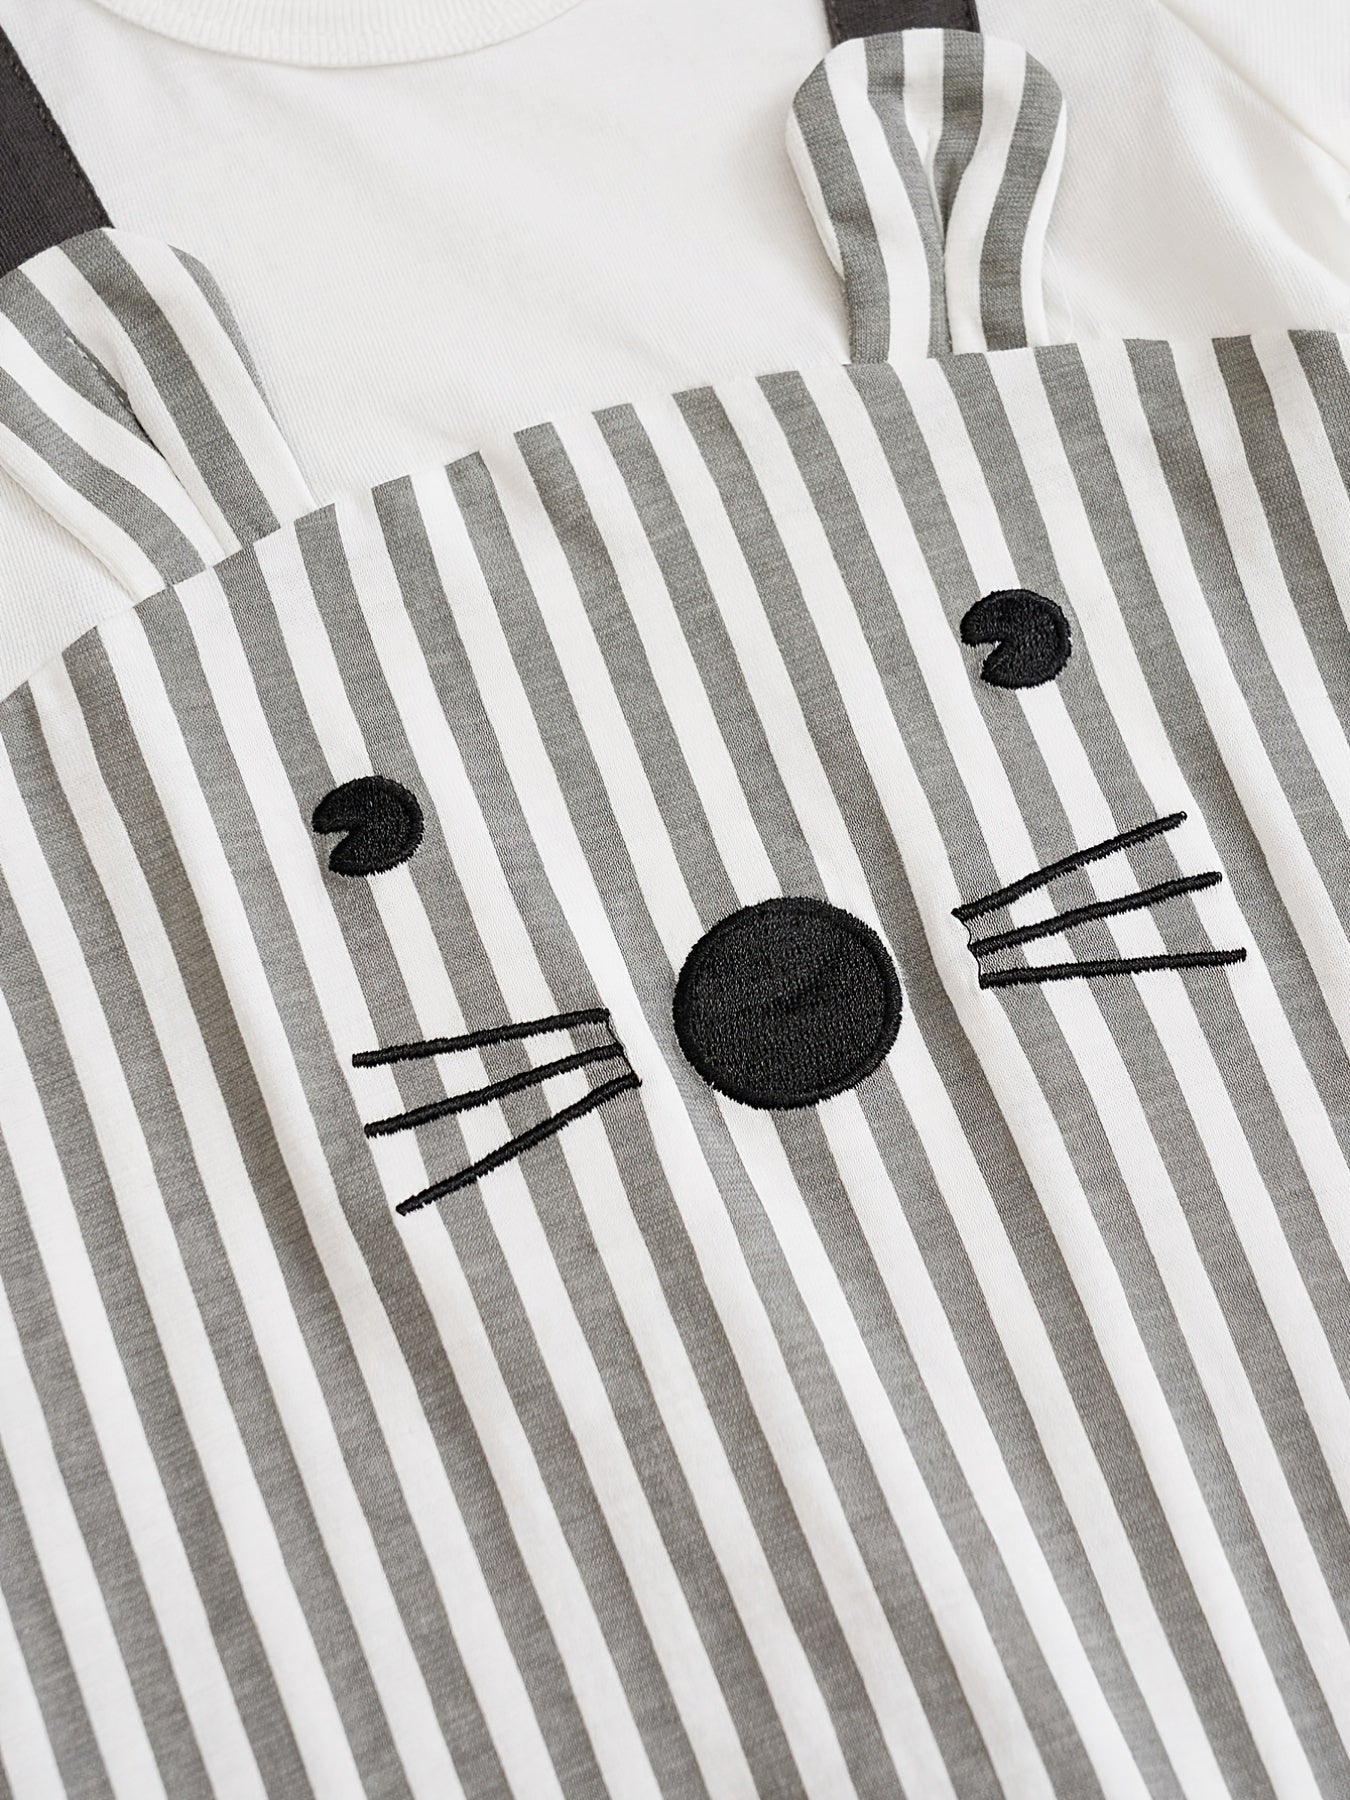 Super Cute Cartoon Animal Mouse Print Baby Boys Long Sleeve Jumpsuit